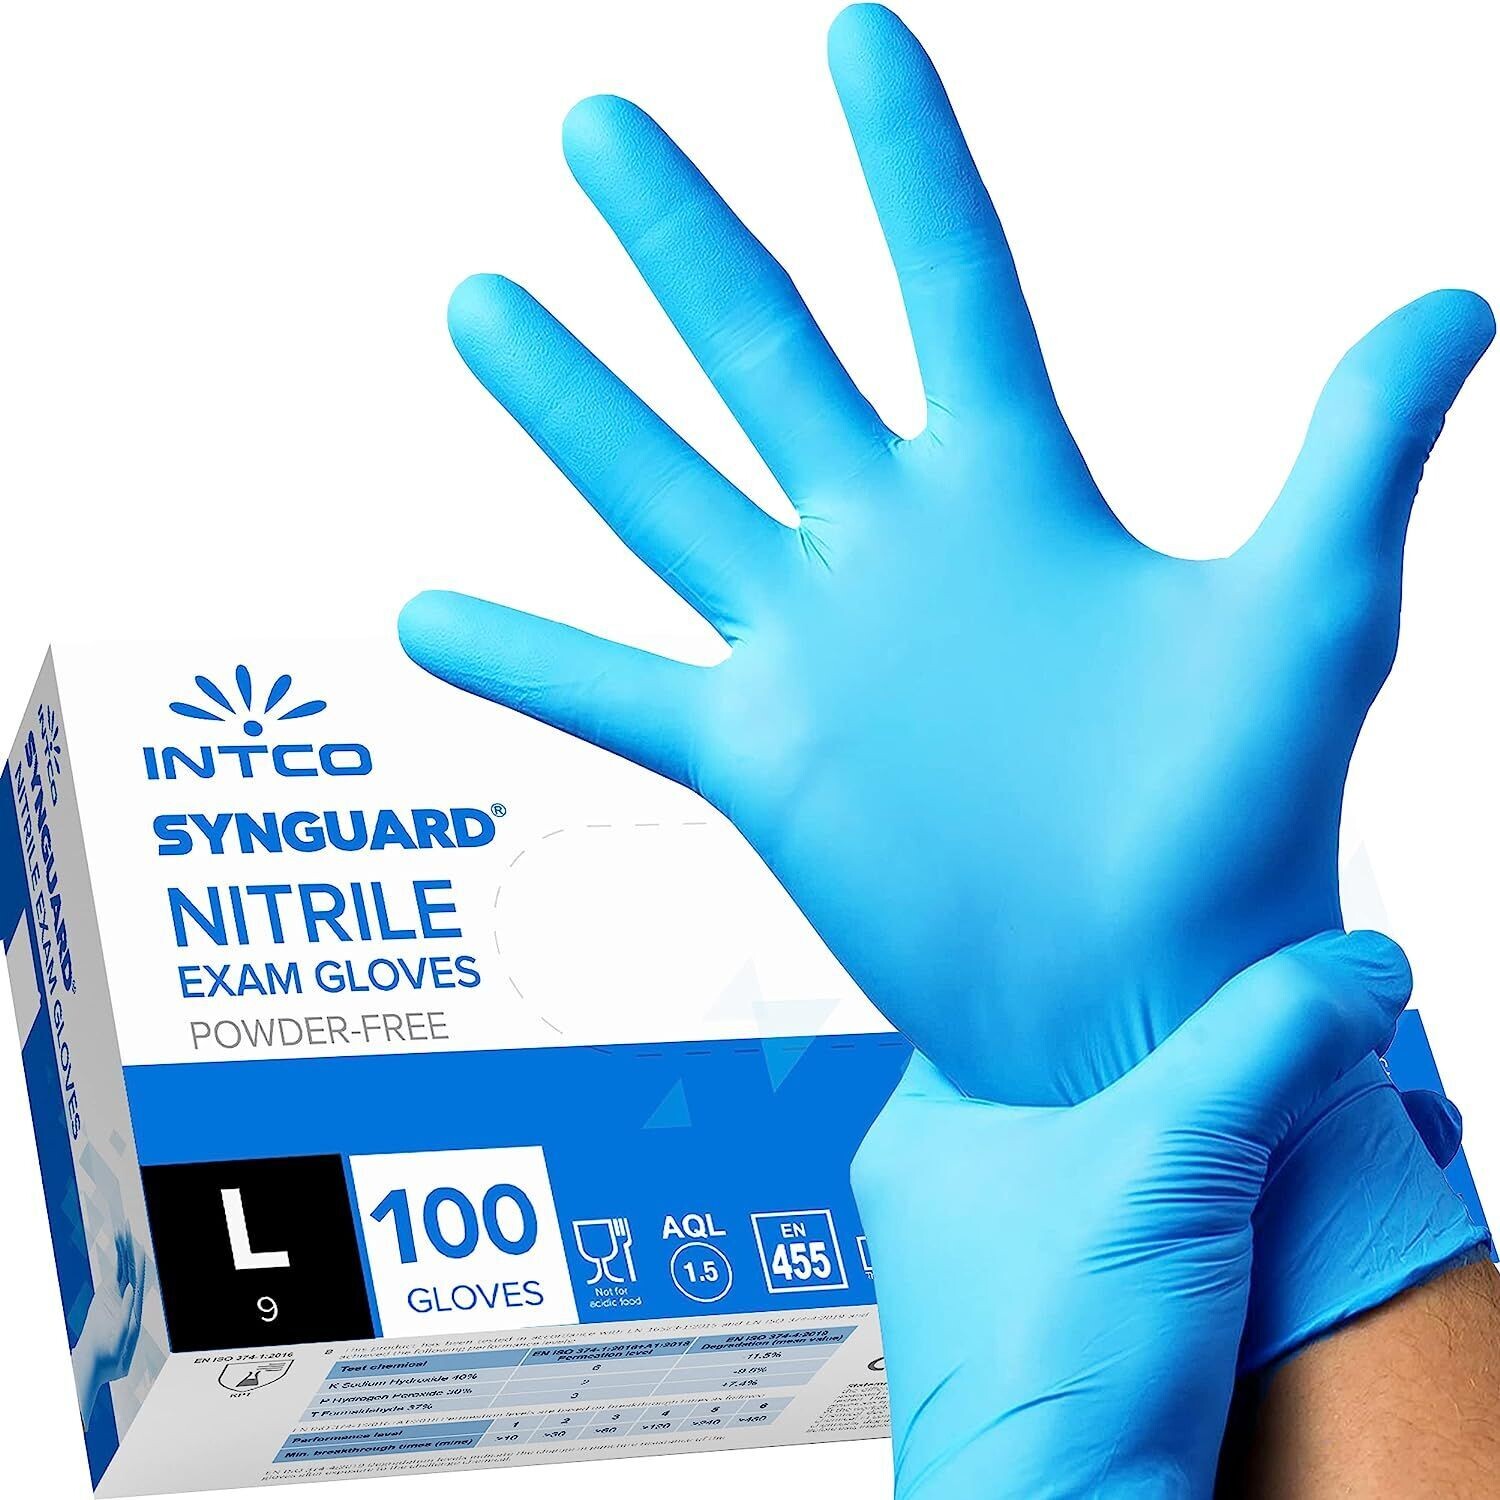 Intco Nitrile Gloves Powder-Free (Box of 100)